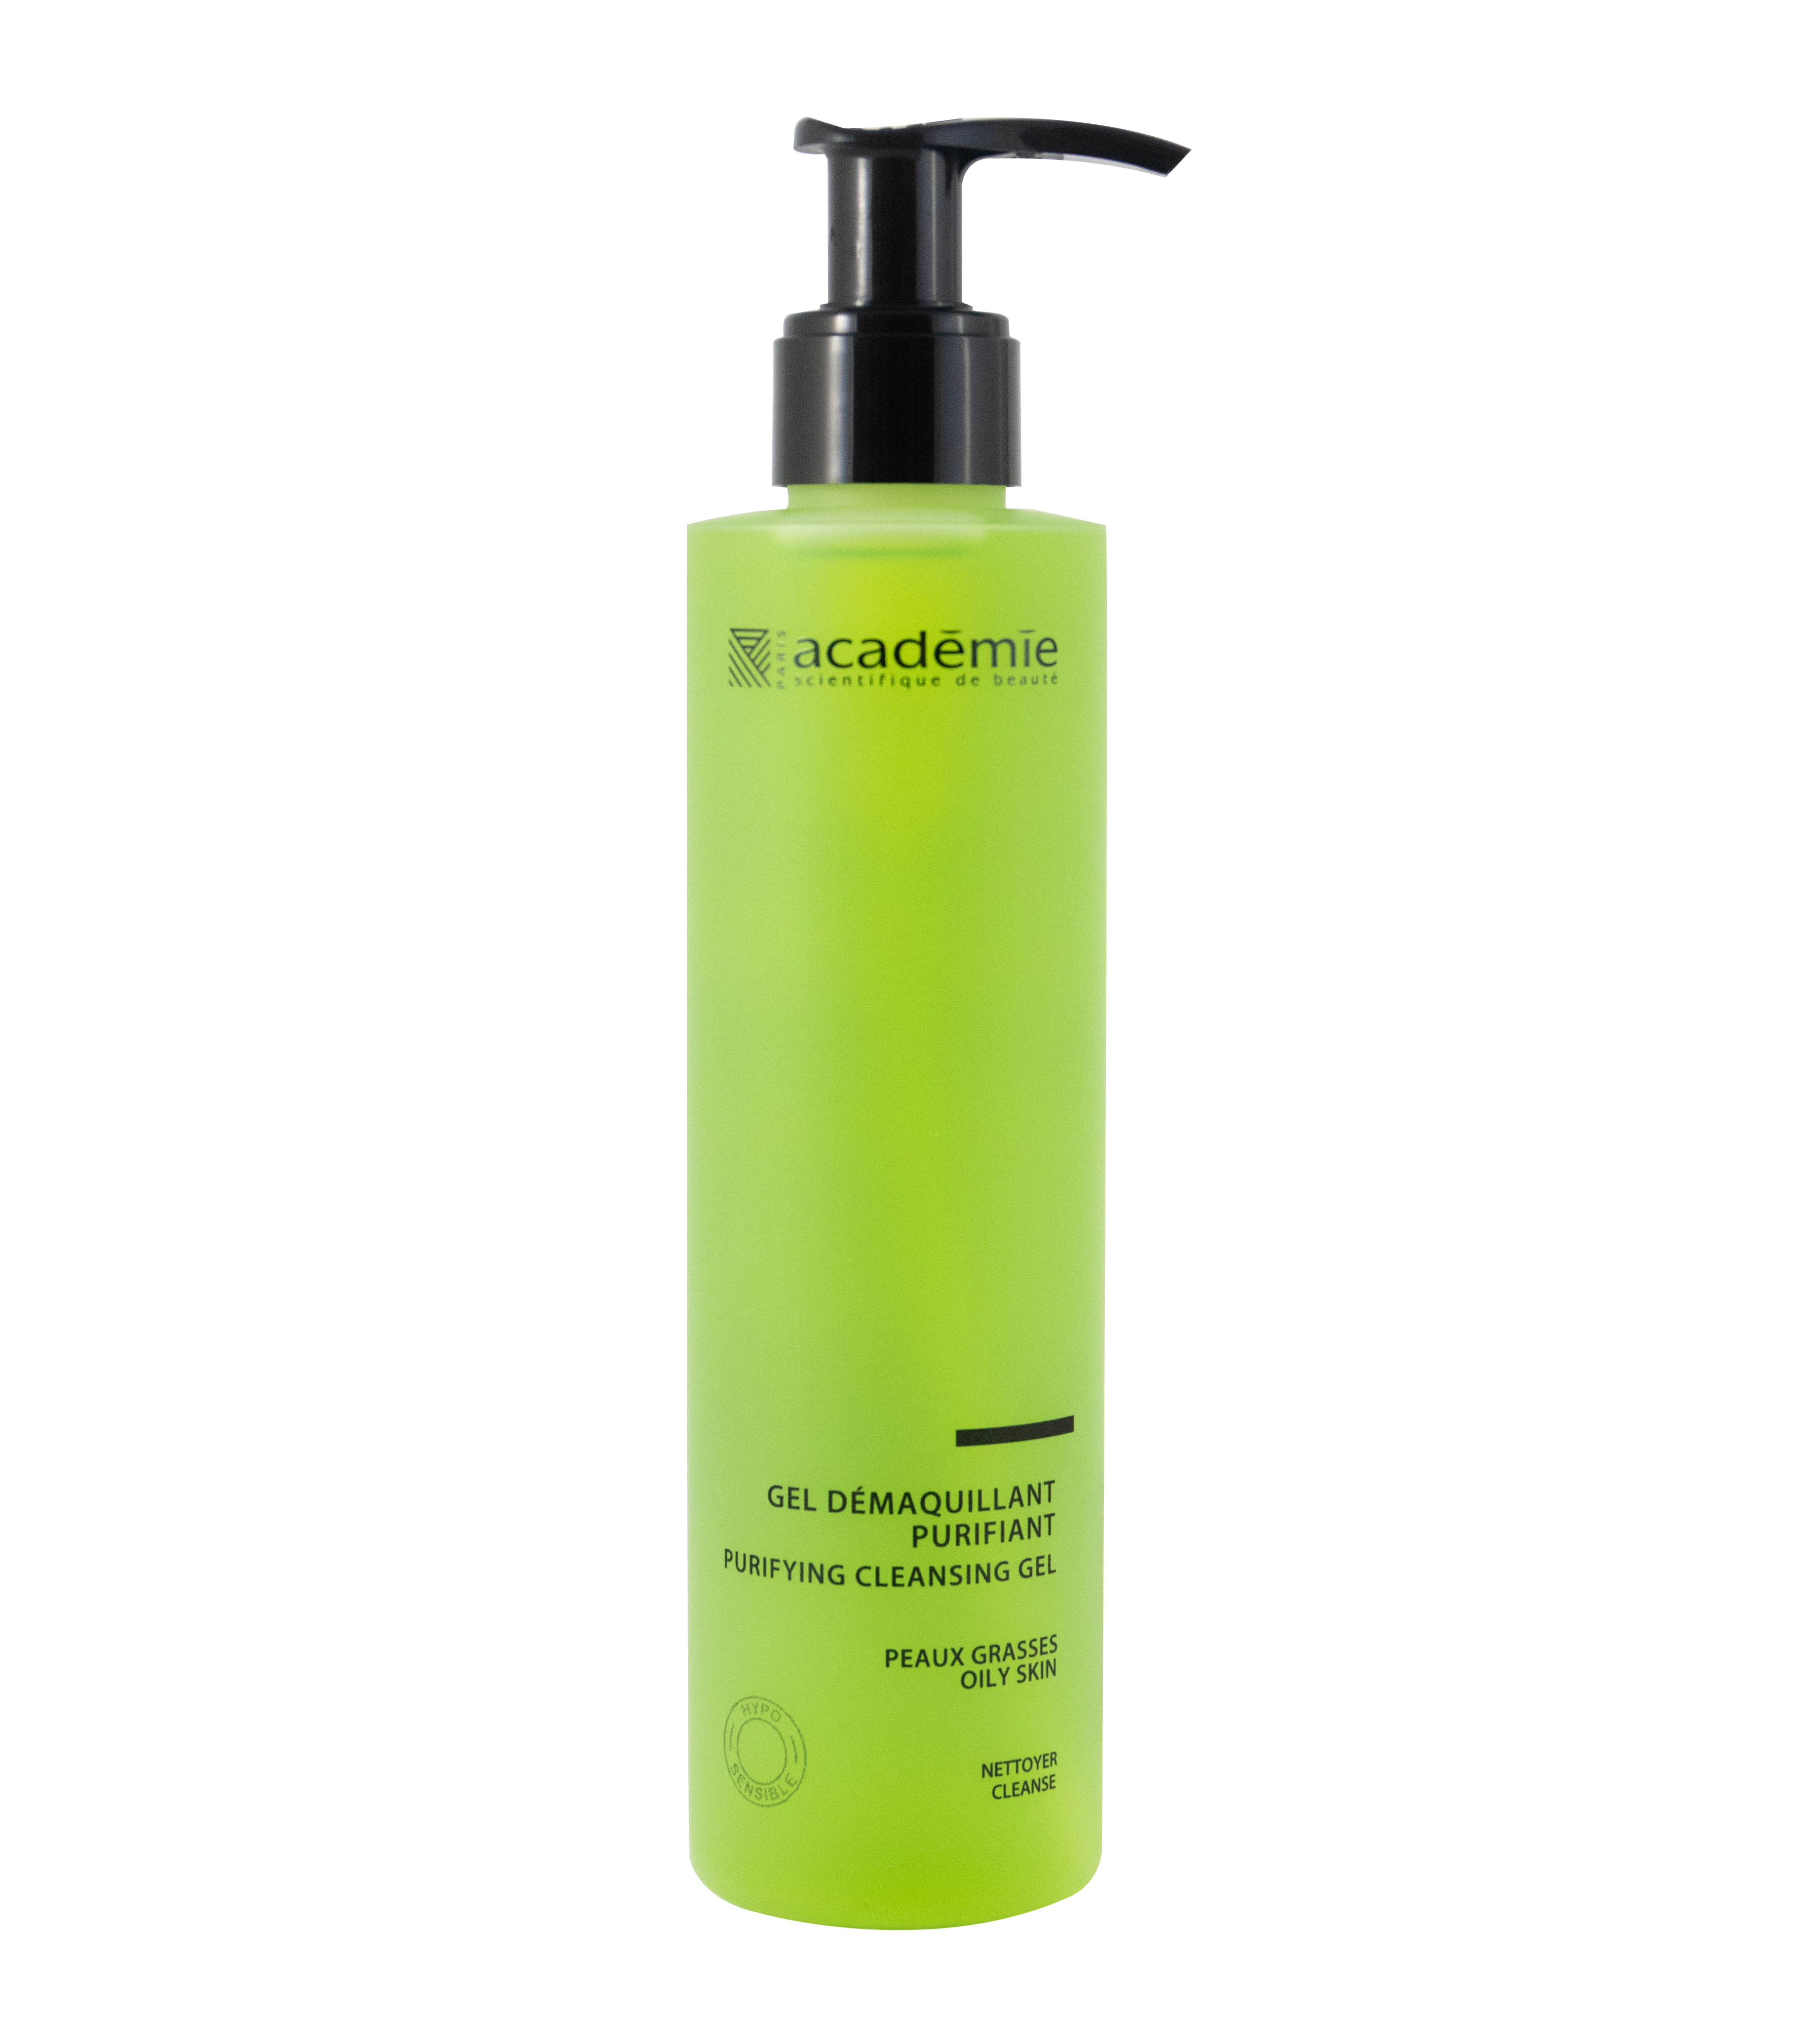 Purifying cleansing gel. Academie Purifying Cleansing Gel. Гель Academie зелёный. PROSALON intensis Moisture Shampoo. Intensis PROSALON Conditioner.